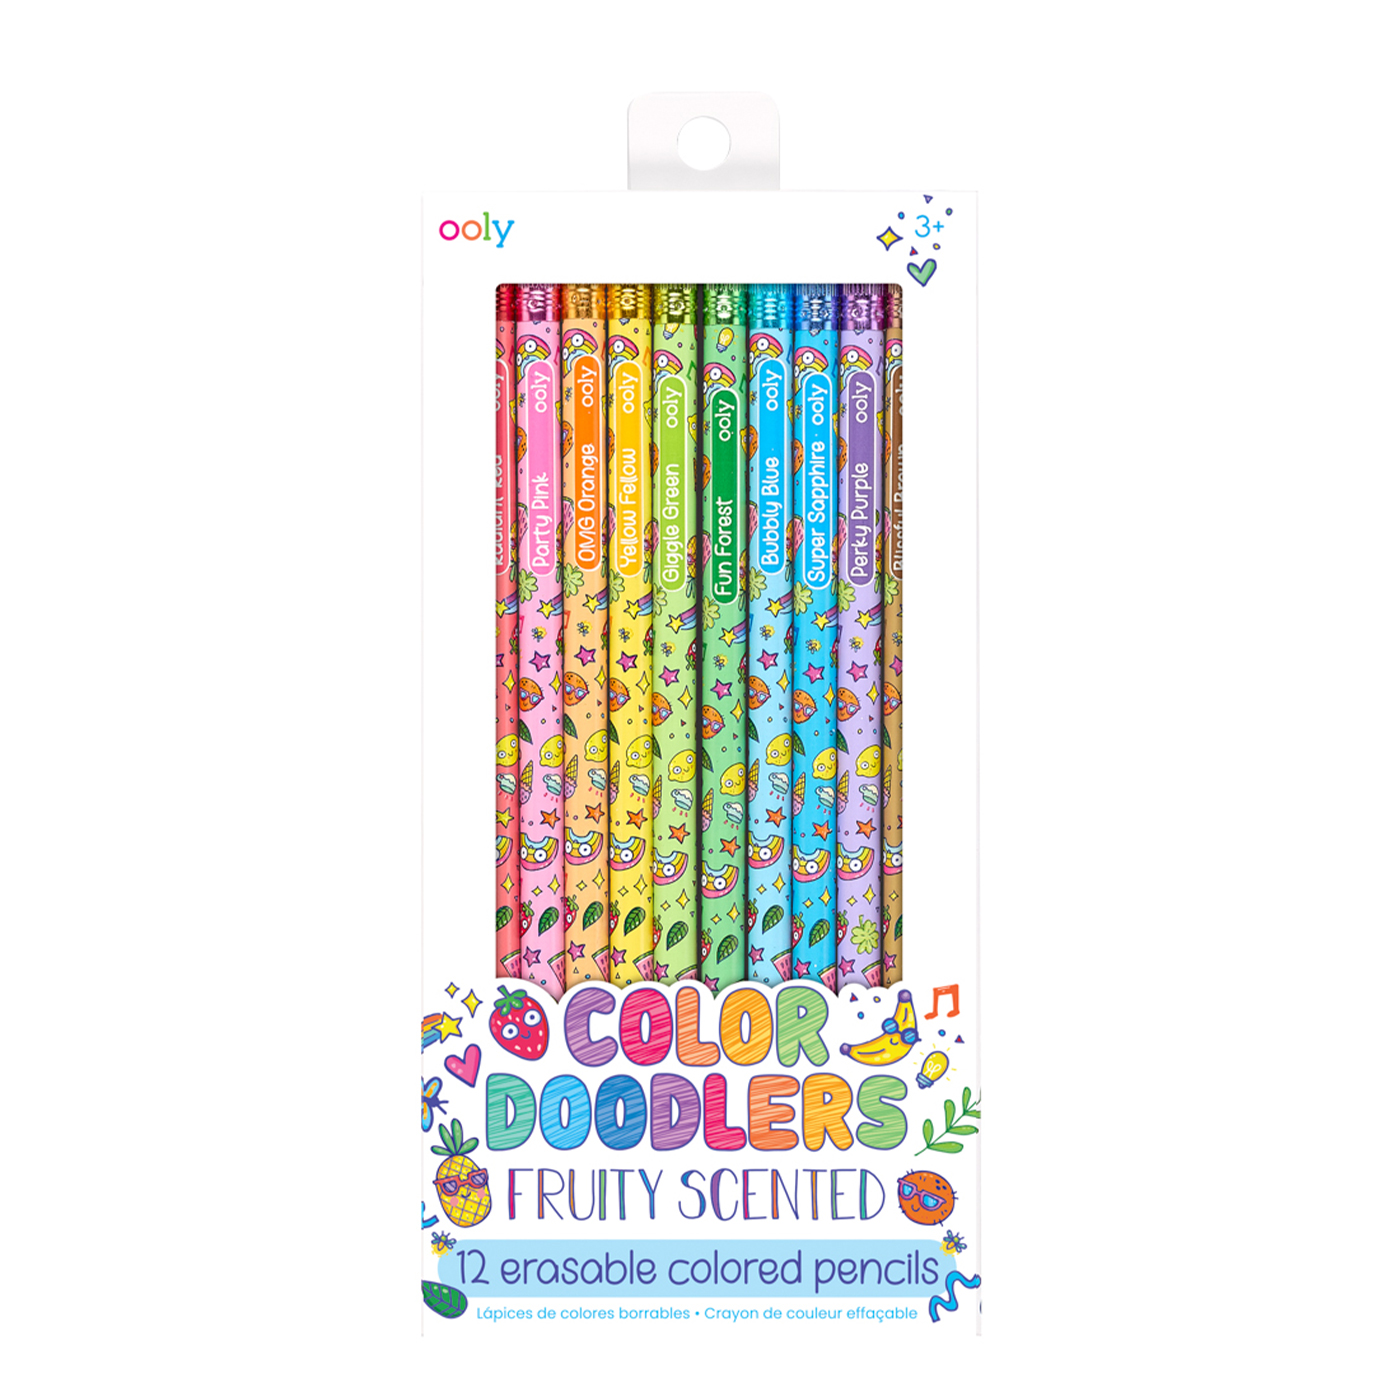  Ooly Color Doodlers Kokulu Silinebilir 12'li Renkli Kurşun Kalem